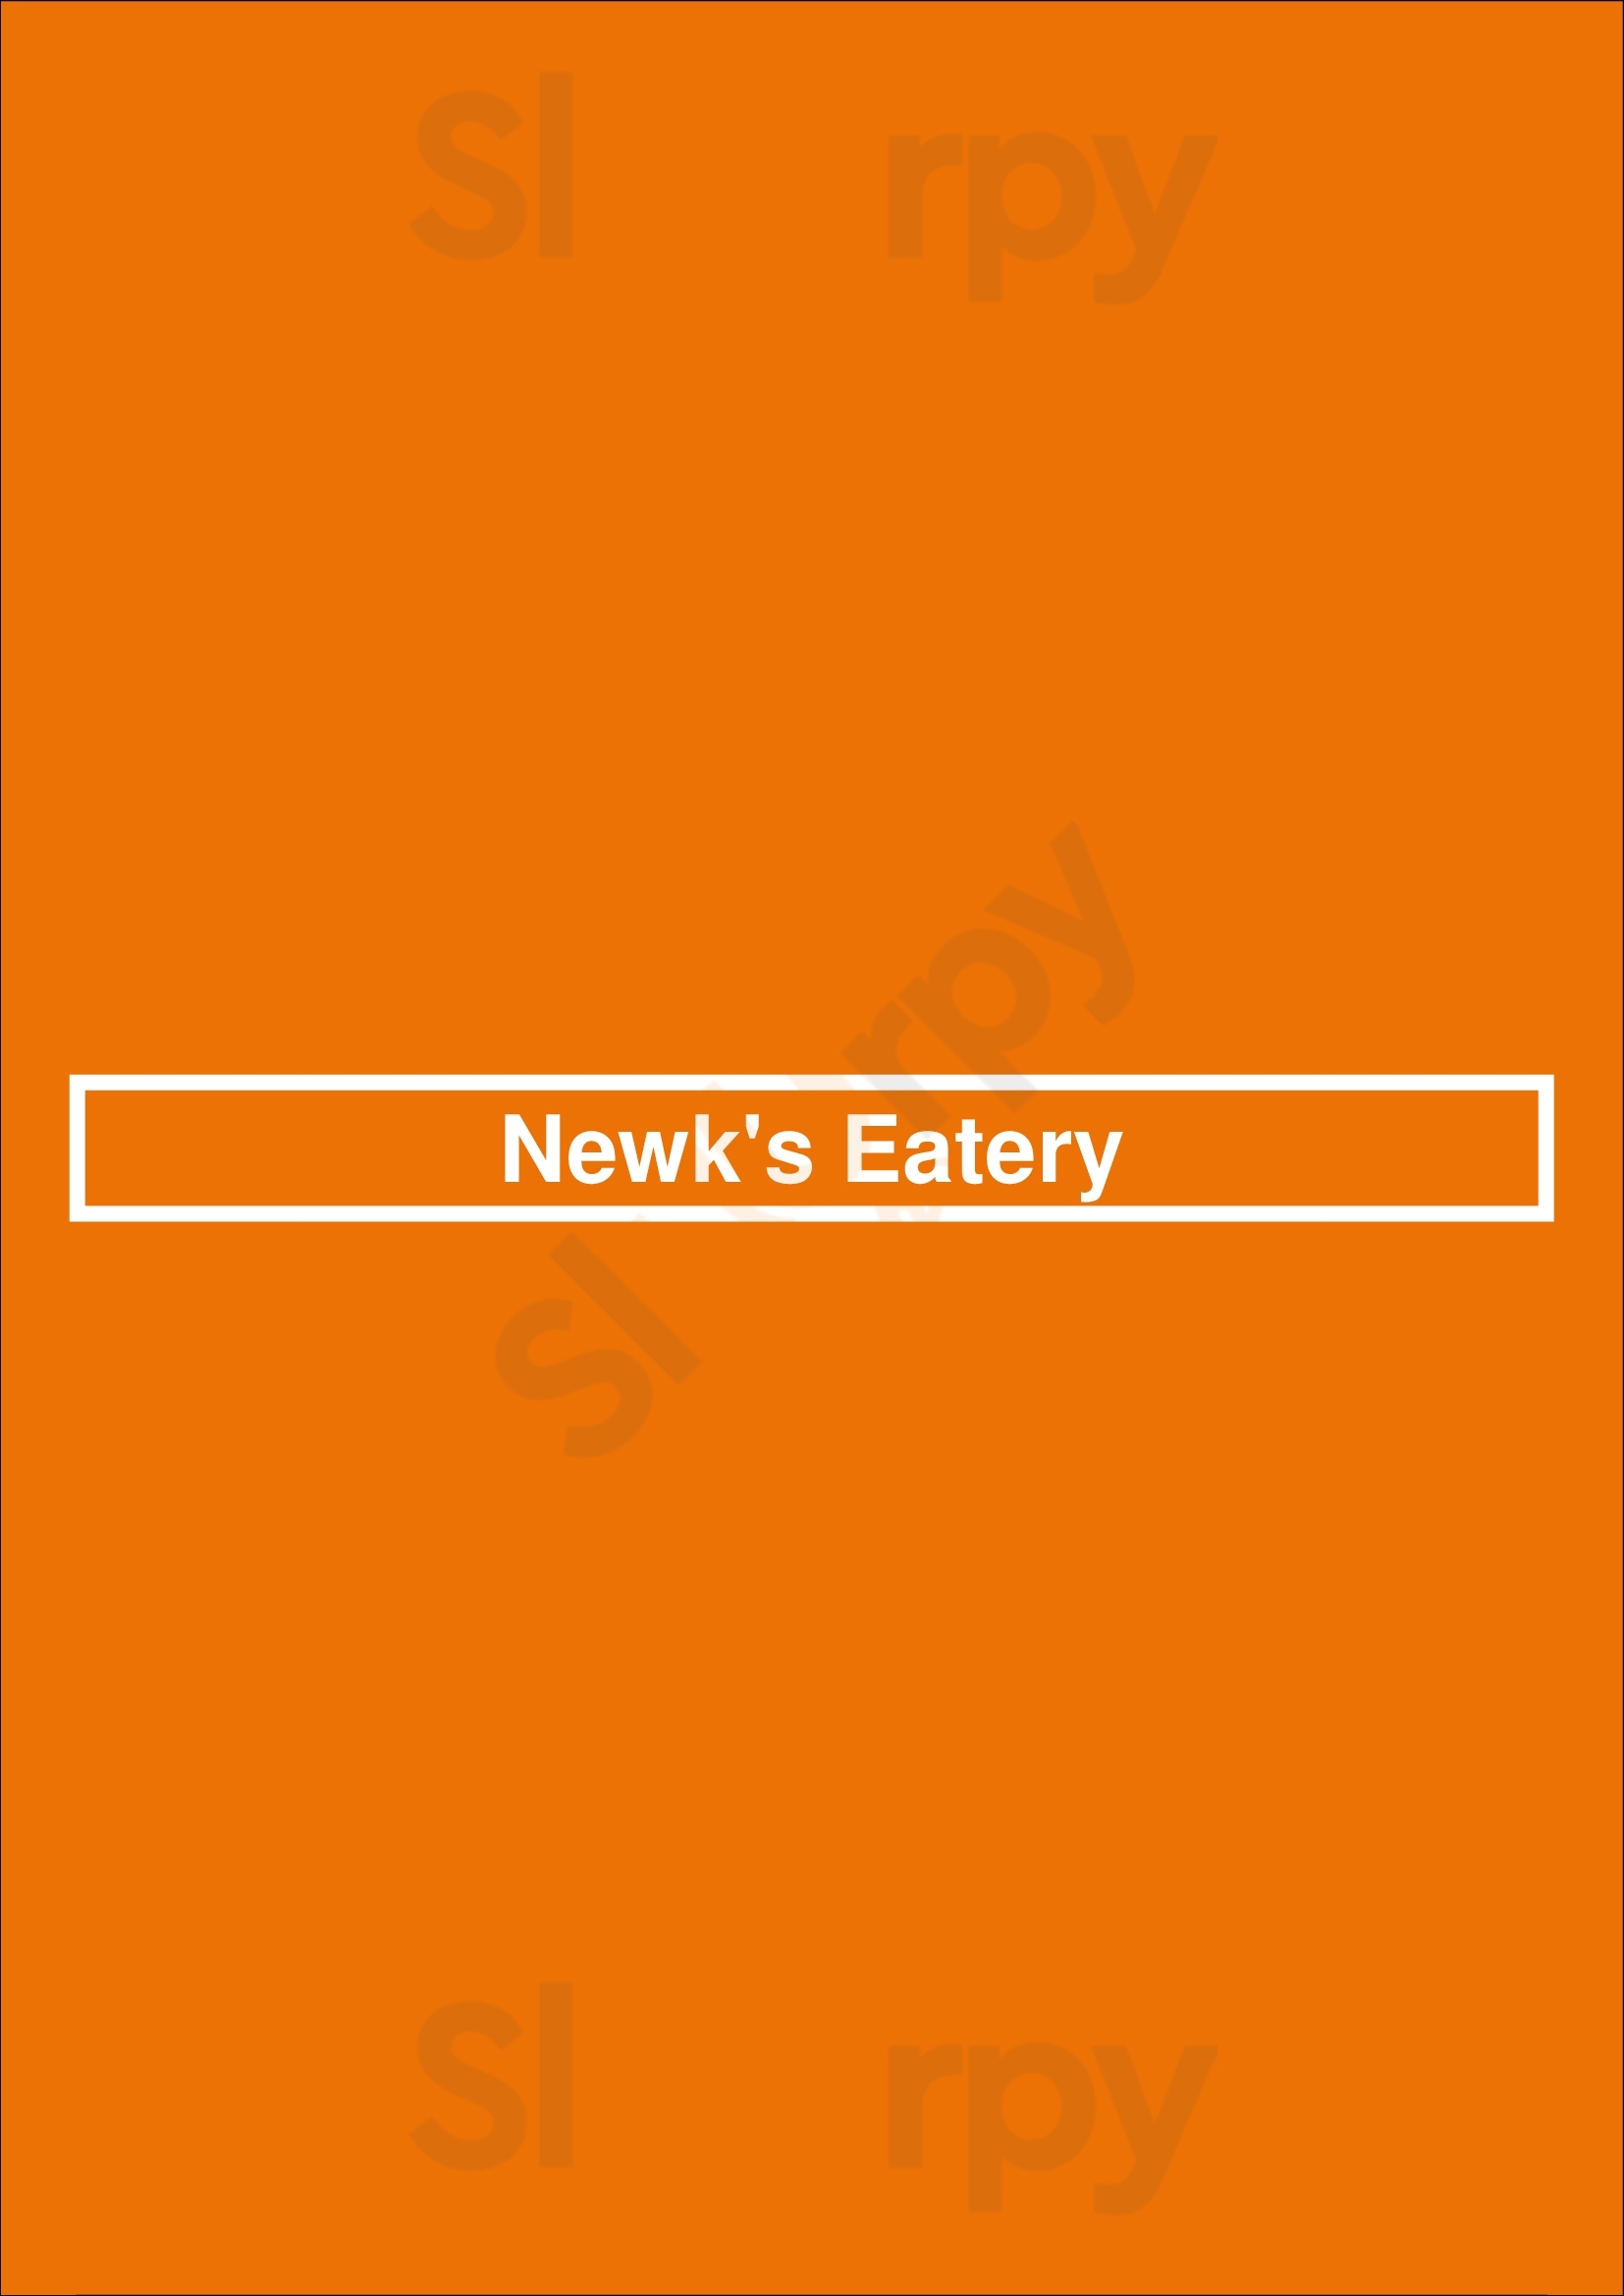 Newk's Eatery Greenwood Menu - 1